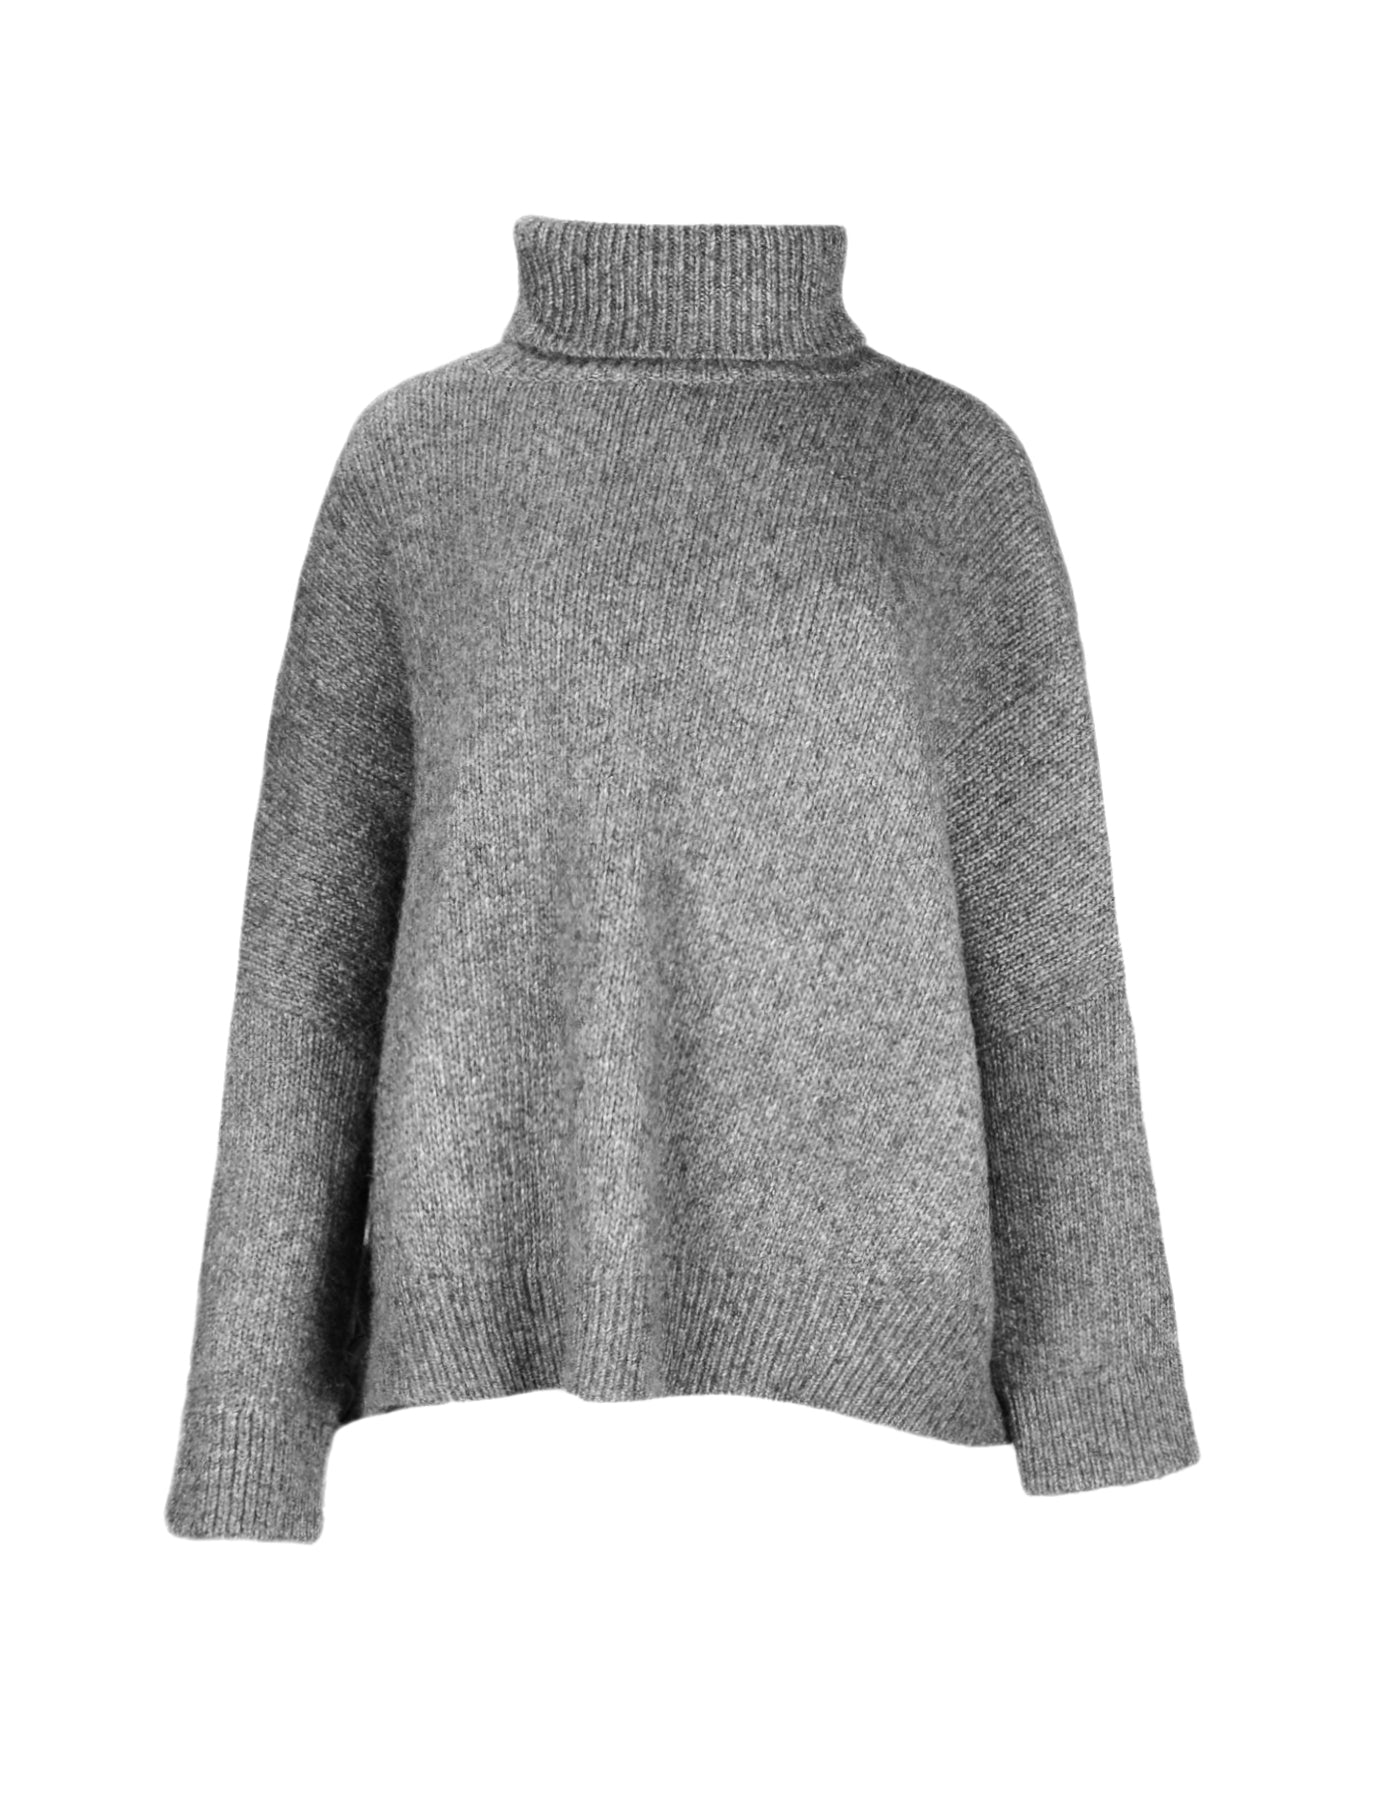 Co 2019 Grey Oversized Alpaca and Prima Cotton-Blend Turtleneck Sweater sz M/L